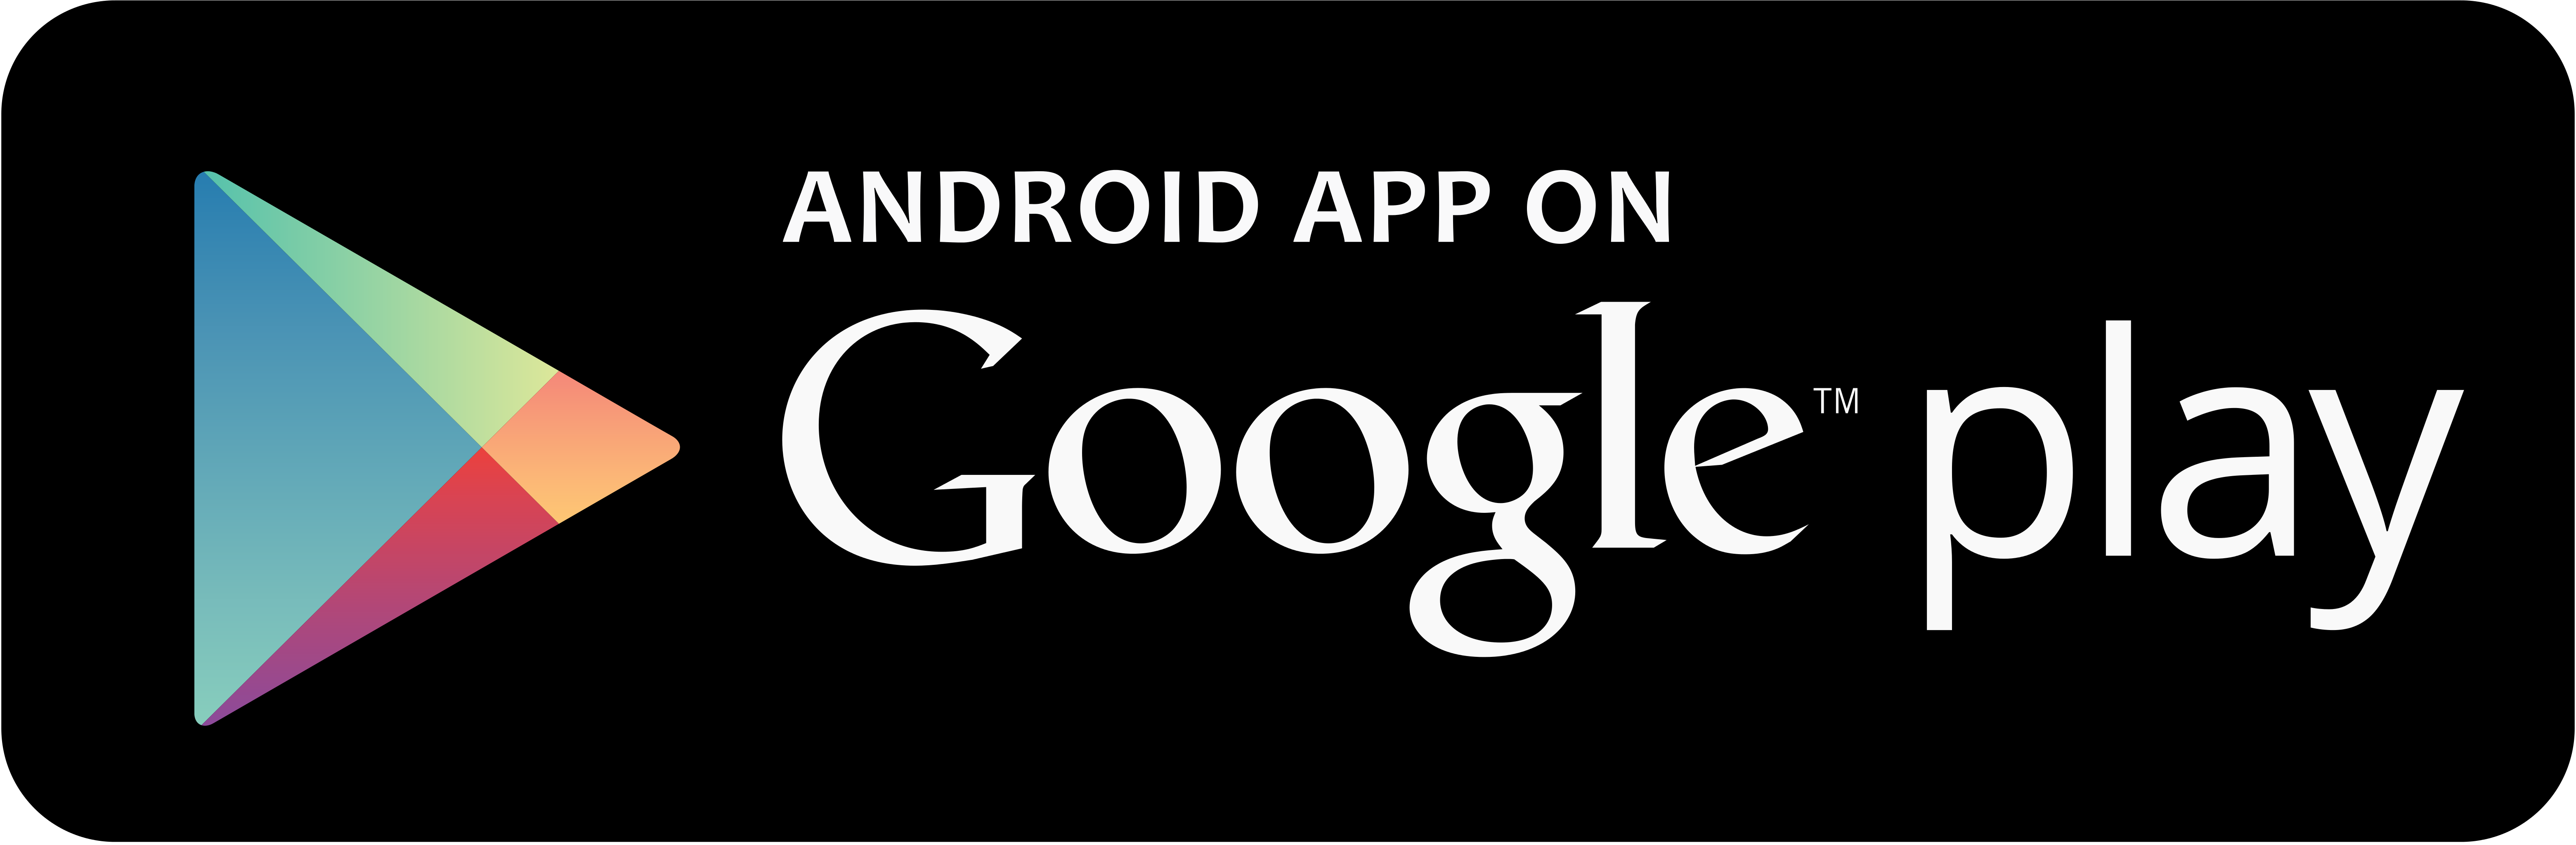 Android-app-on-google-play.svg - Niagara's Choice